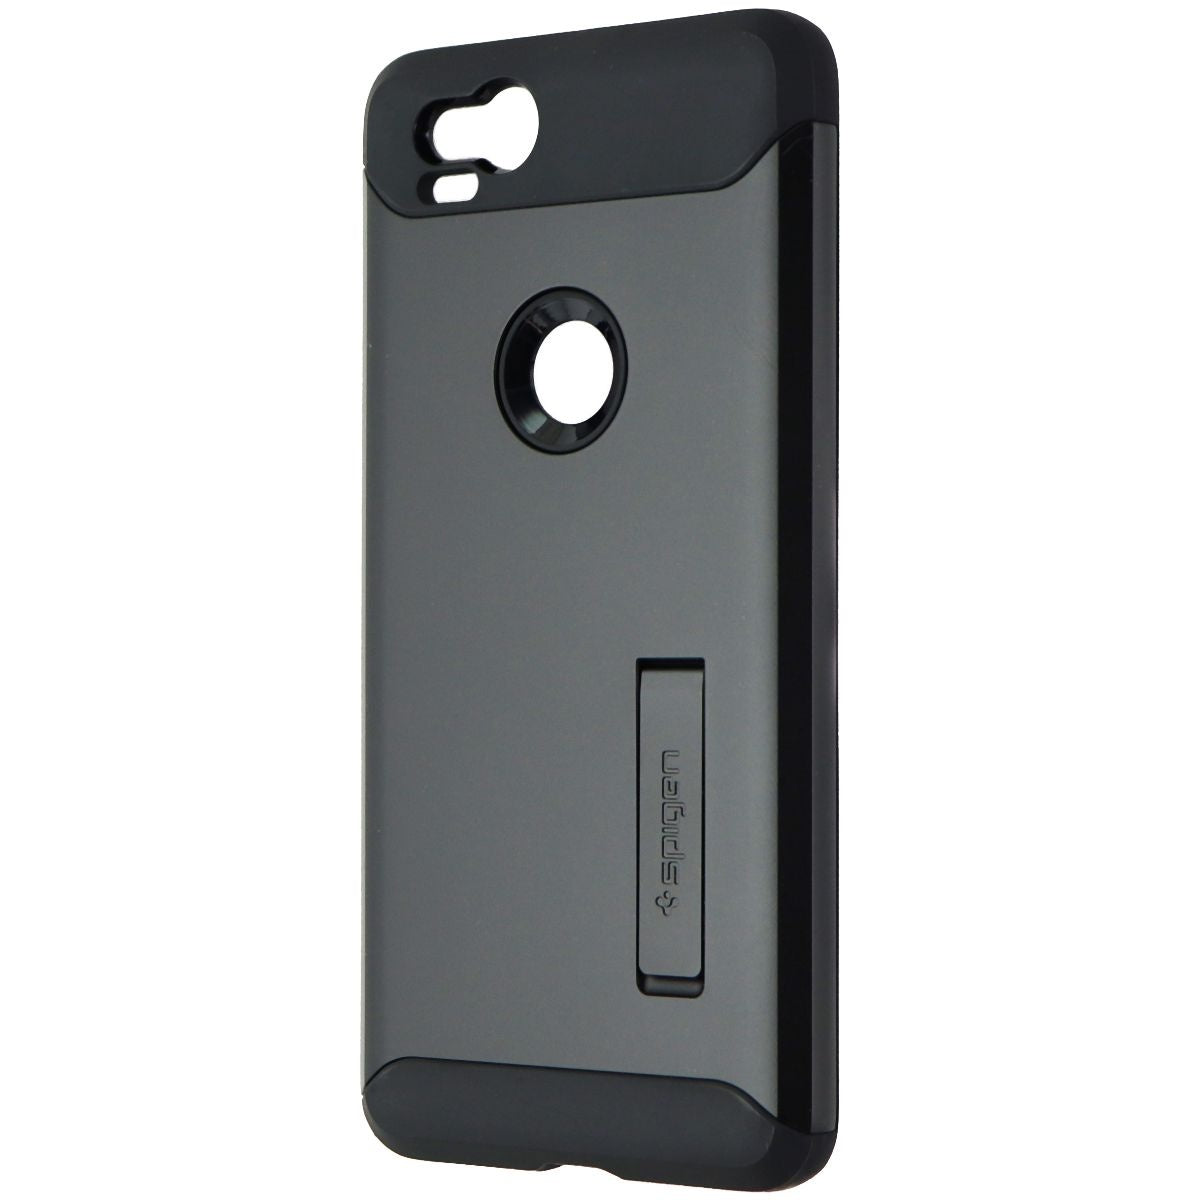 Spigen Slim Armor Series Case for Google Pixel 2 - Black Cell Phone - Cases, Covers & Skins Spigen    - Simple Cell Bulk Wholesale Pricing - USA Seller